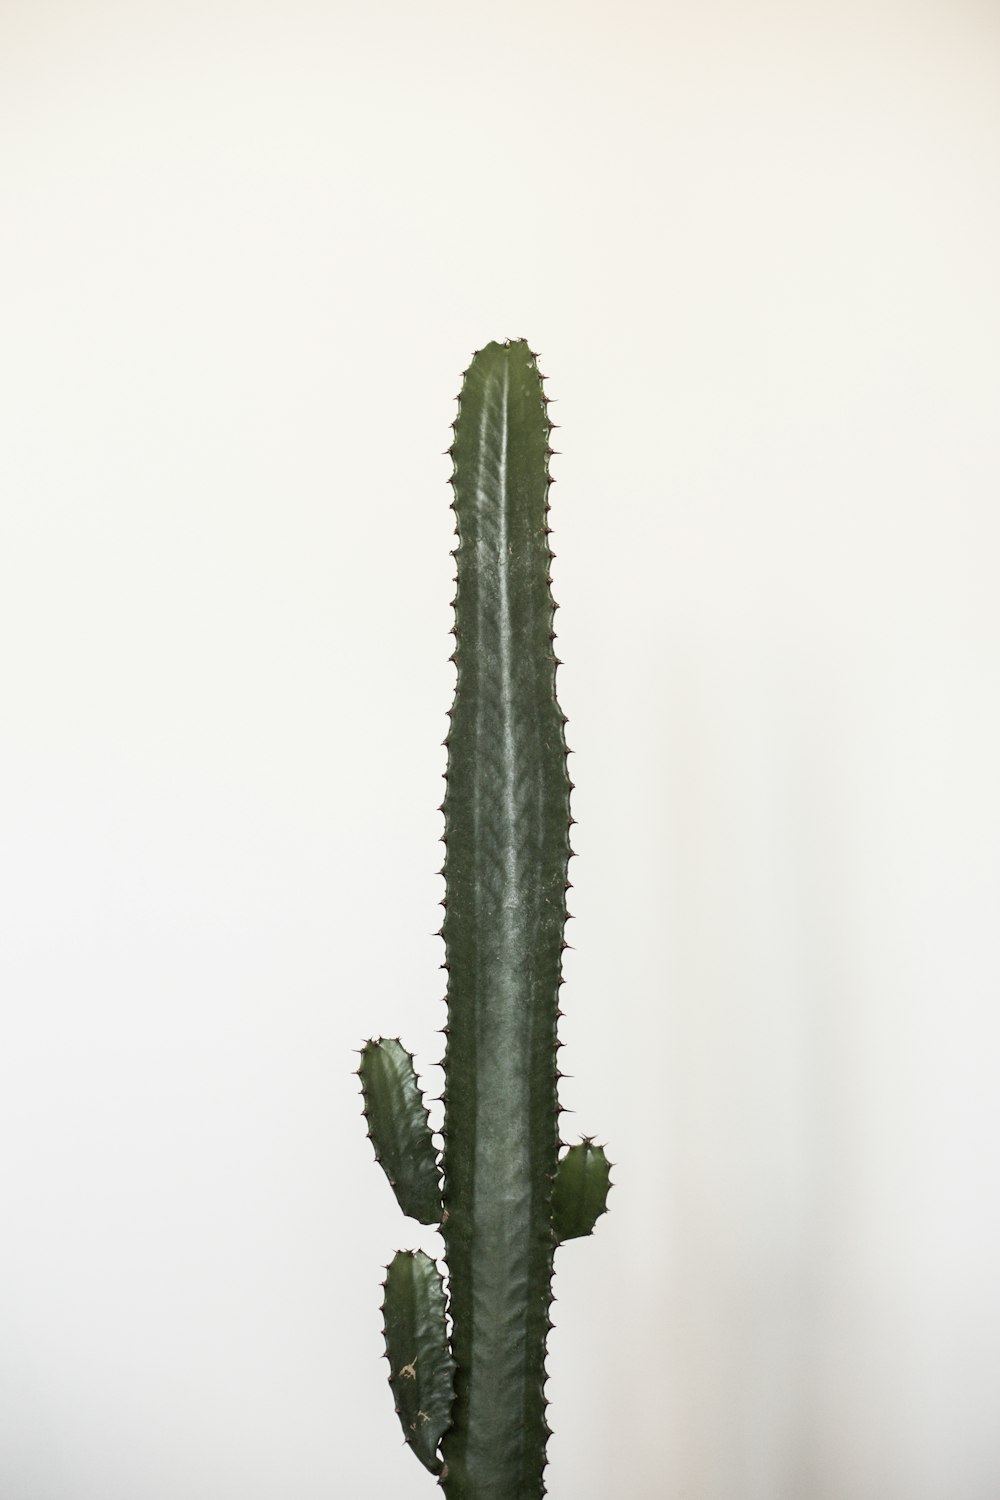 Kaktus Pictures | Download Free Images on Unsplash